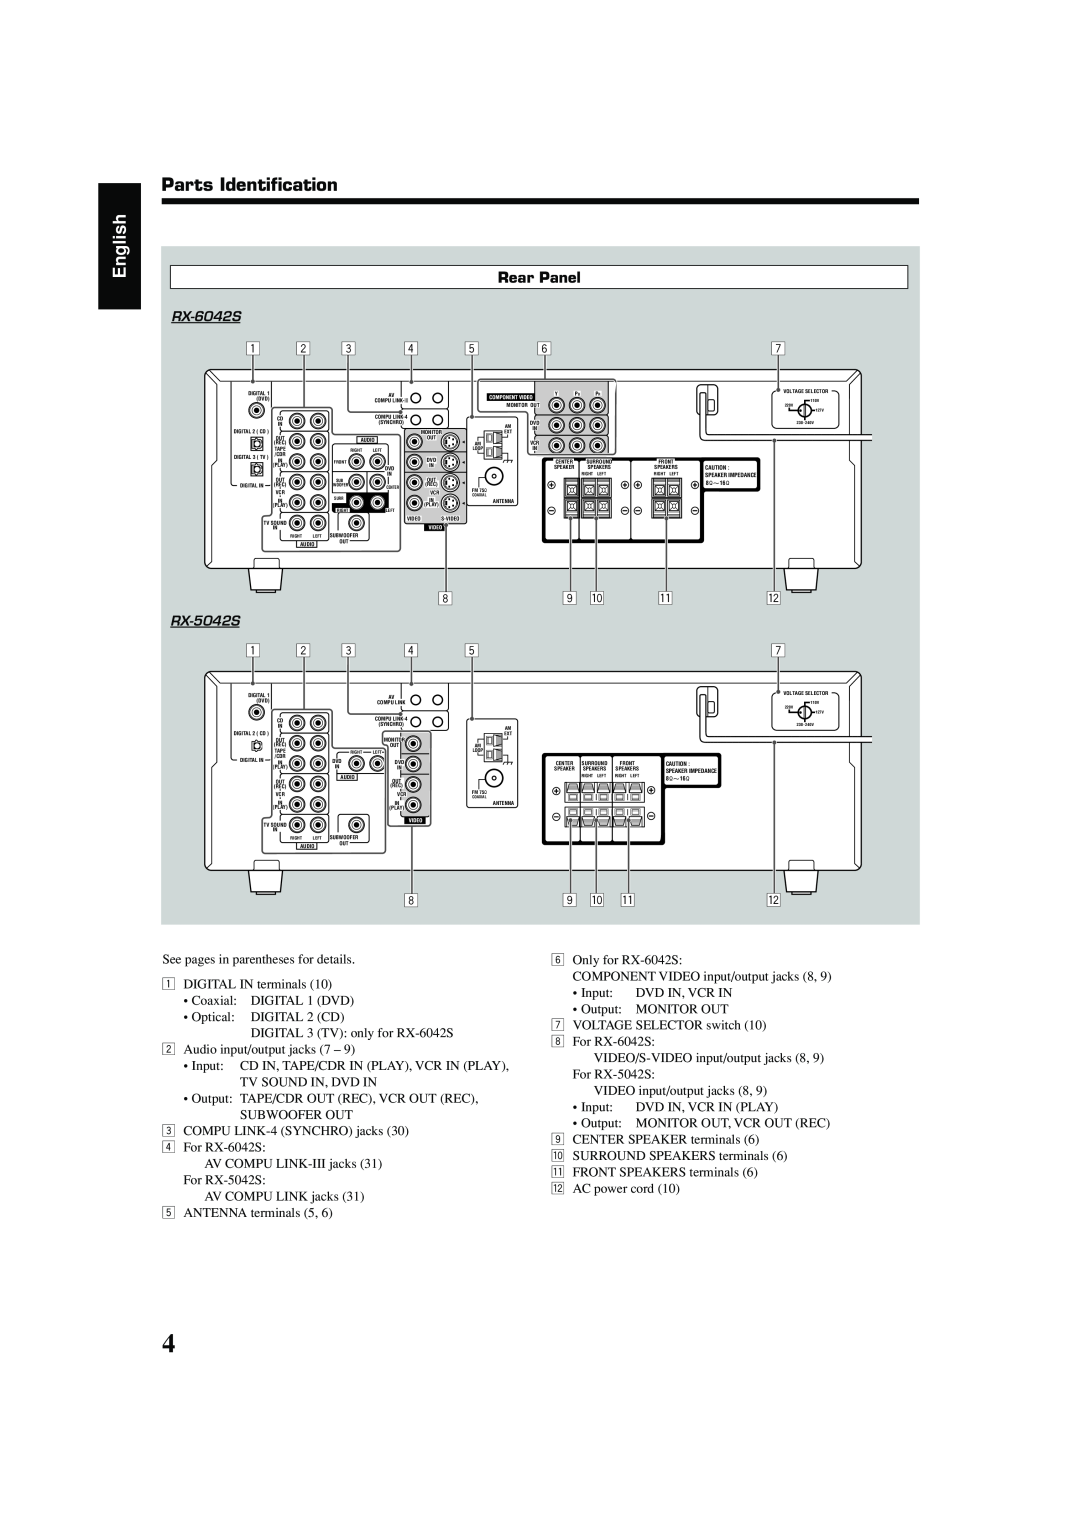 JVC LVT1140-004A manual English, Parts Identification, Rear Panel 